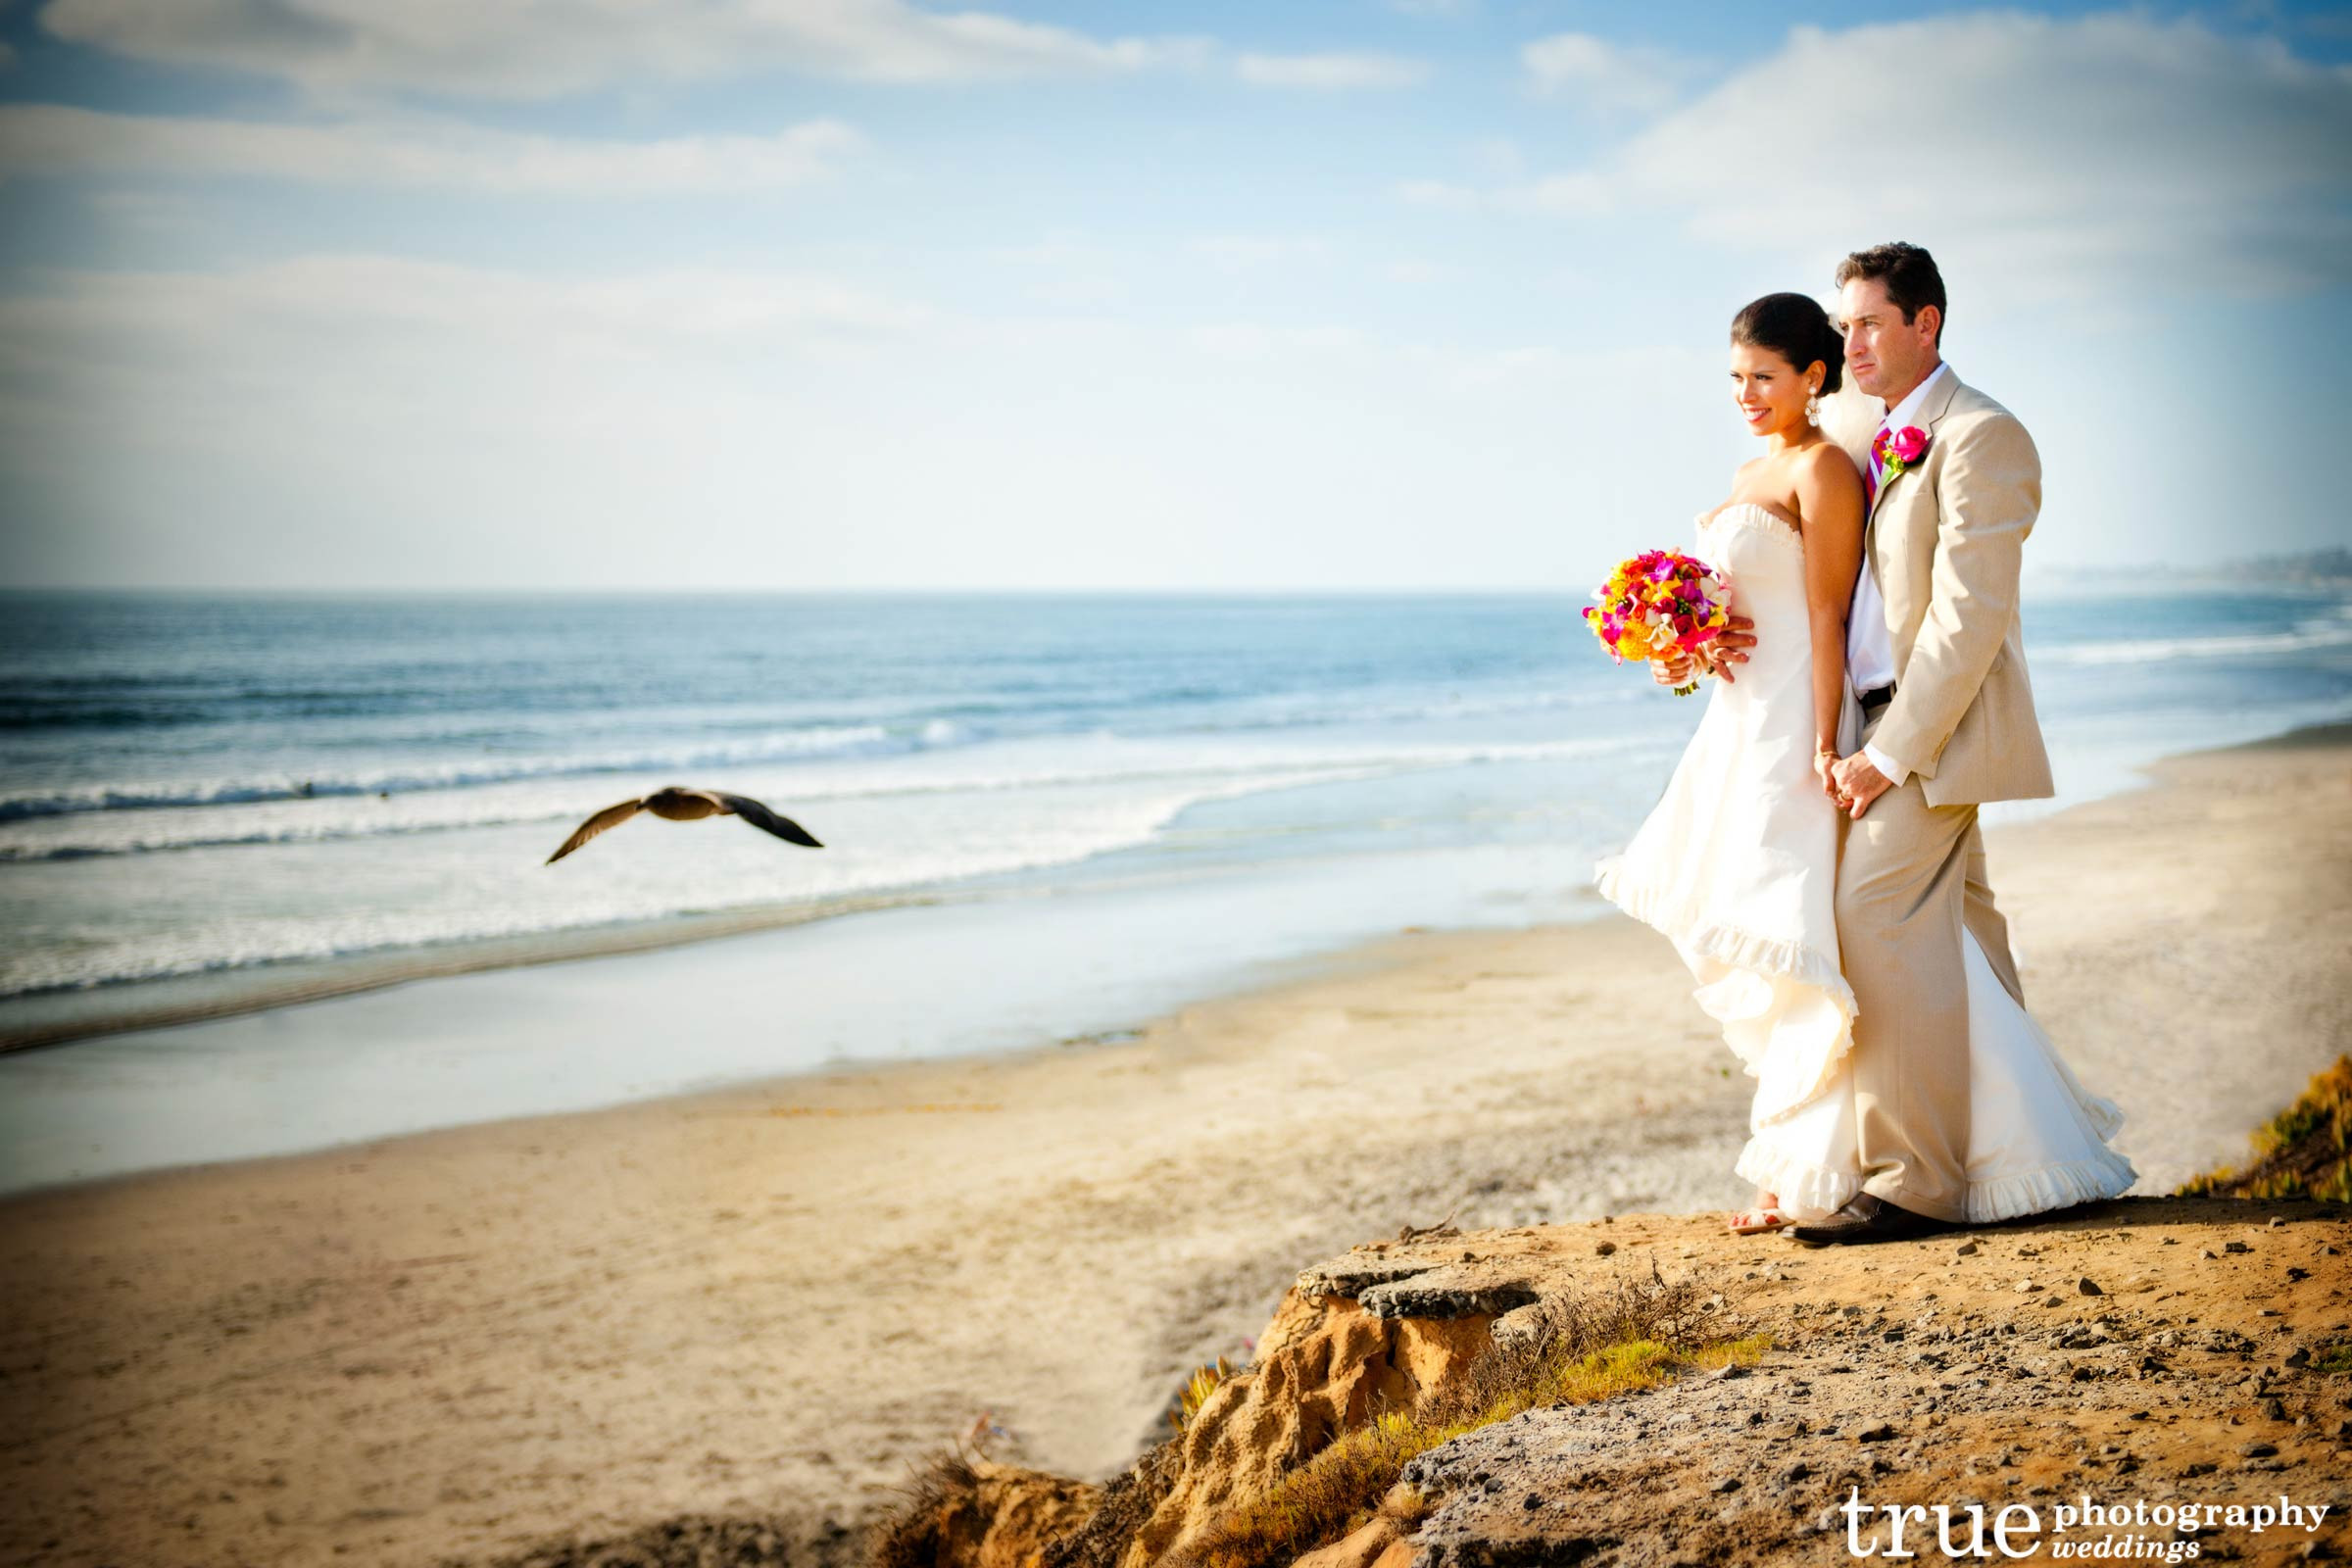 Beach Weddings In San Diego
 San Diego Wedding graphers Join Forces for Beach